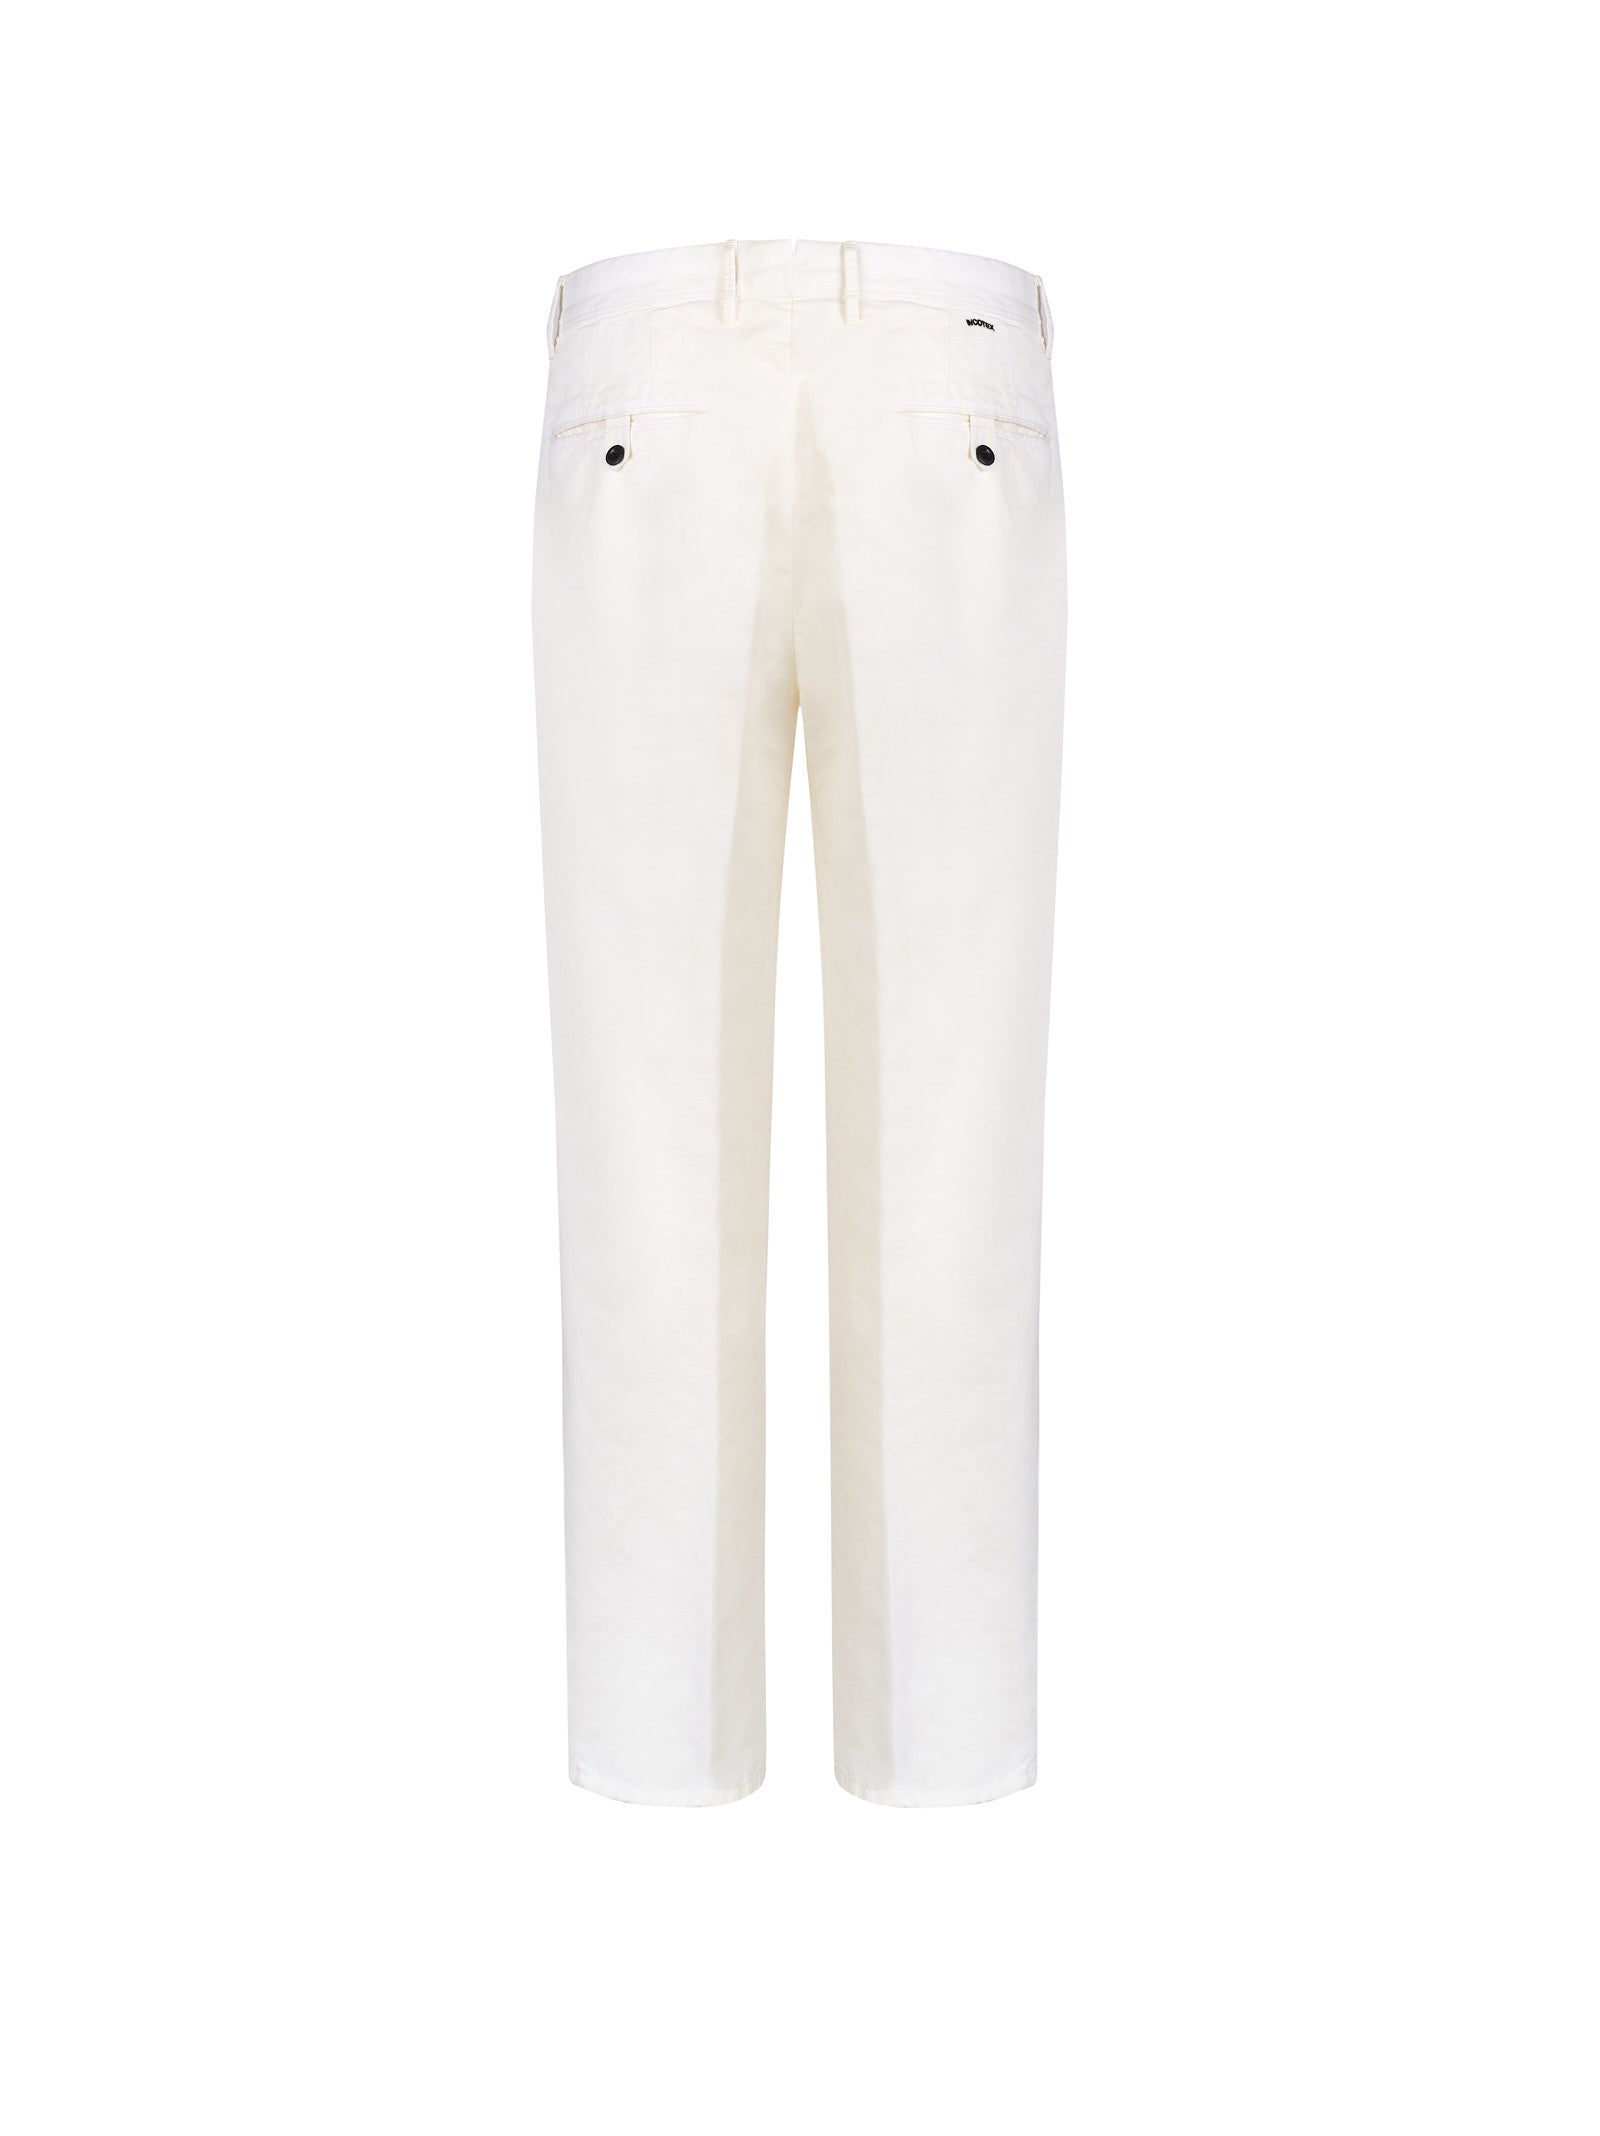 Pantalone INCOTEX
Bianco